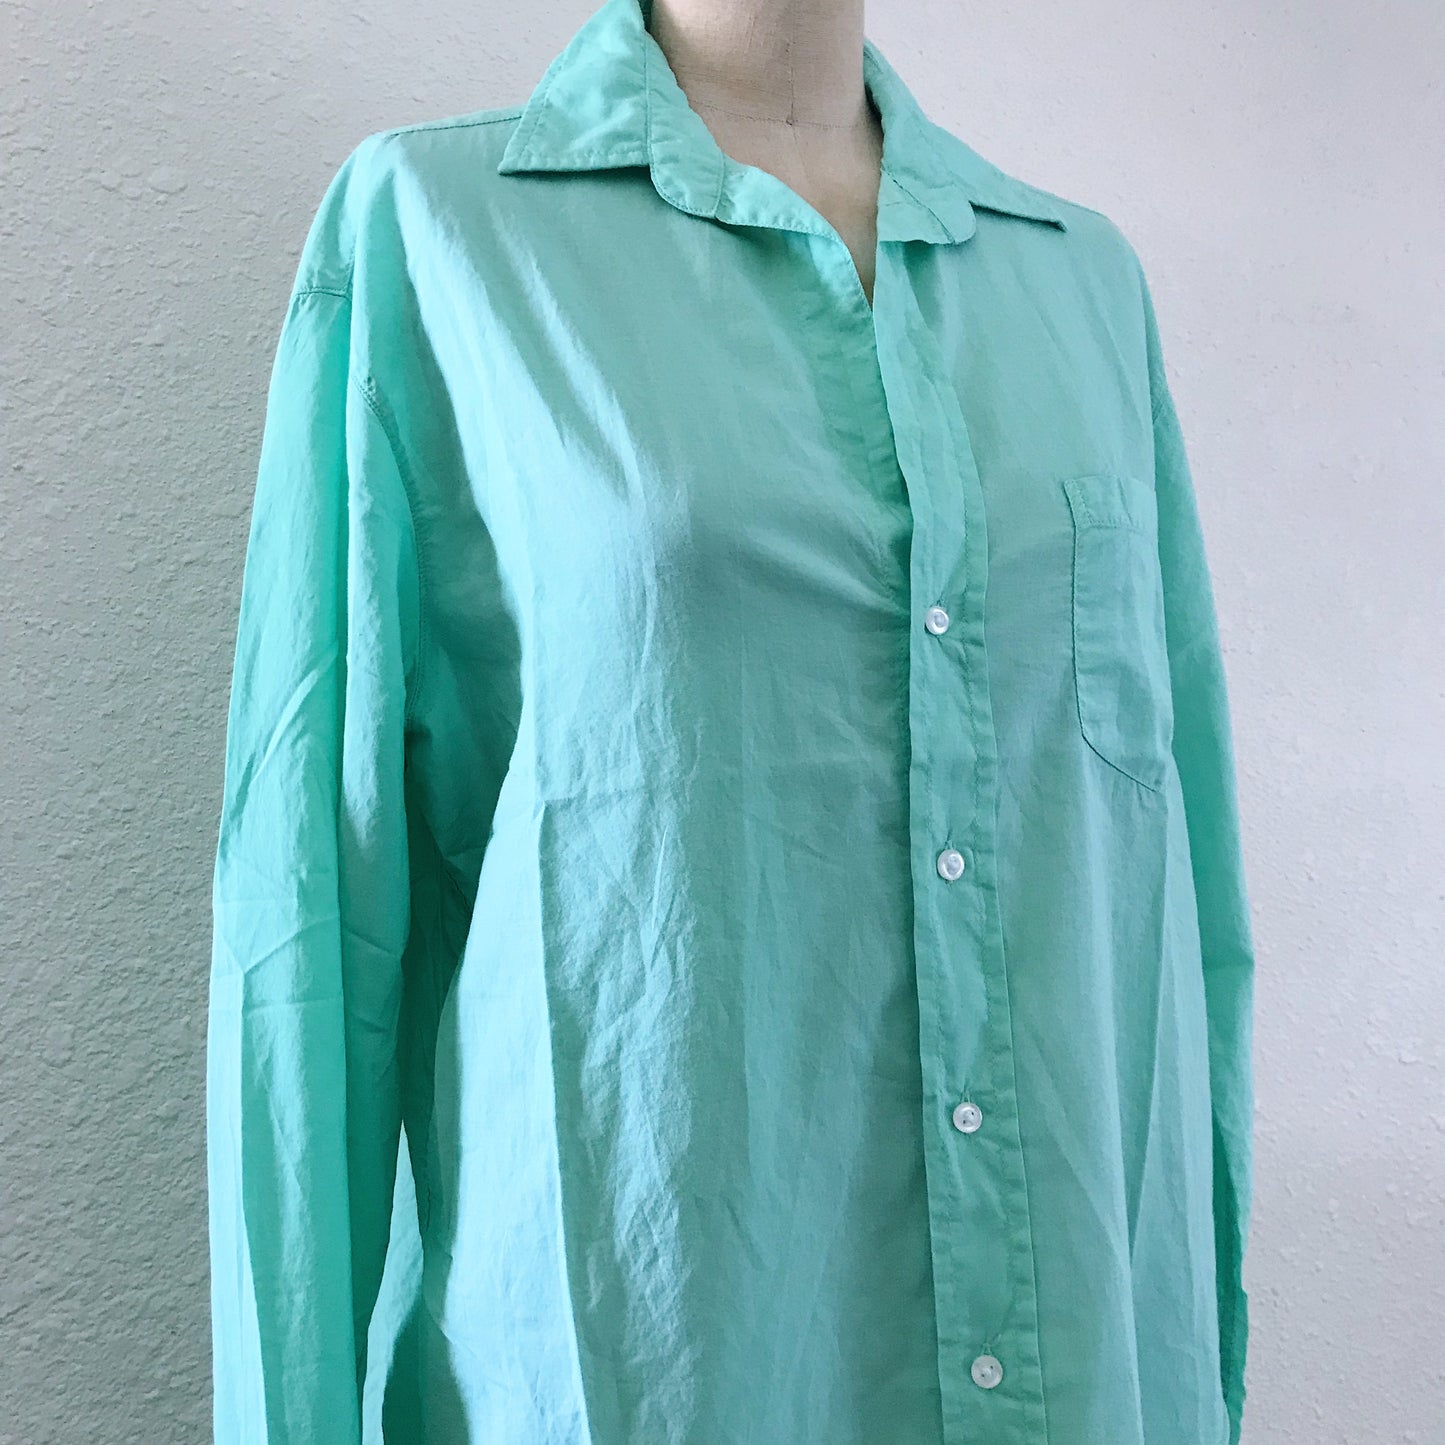 Prelovely | Frank & Eileen Seafoam Green Cotton Voile Tunic Top